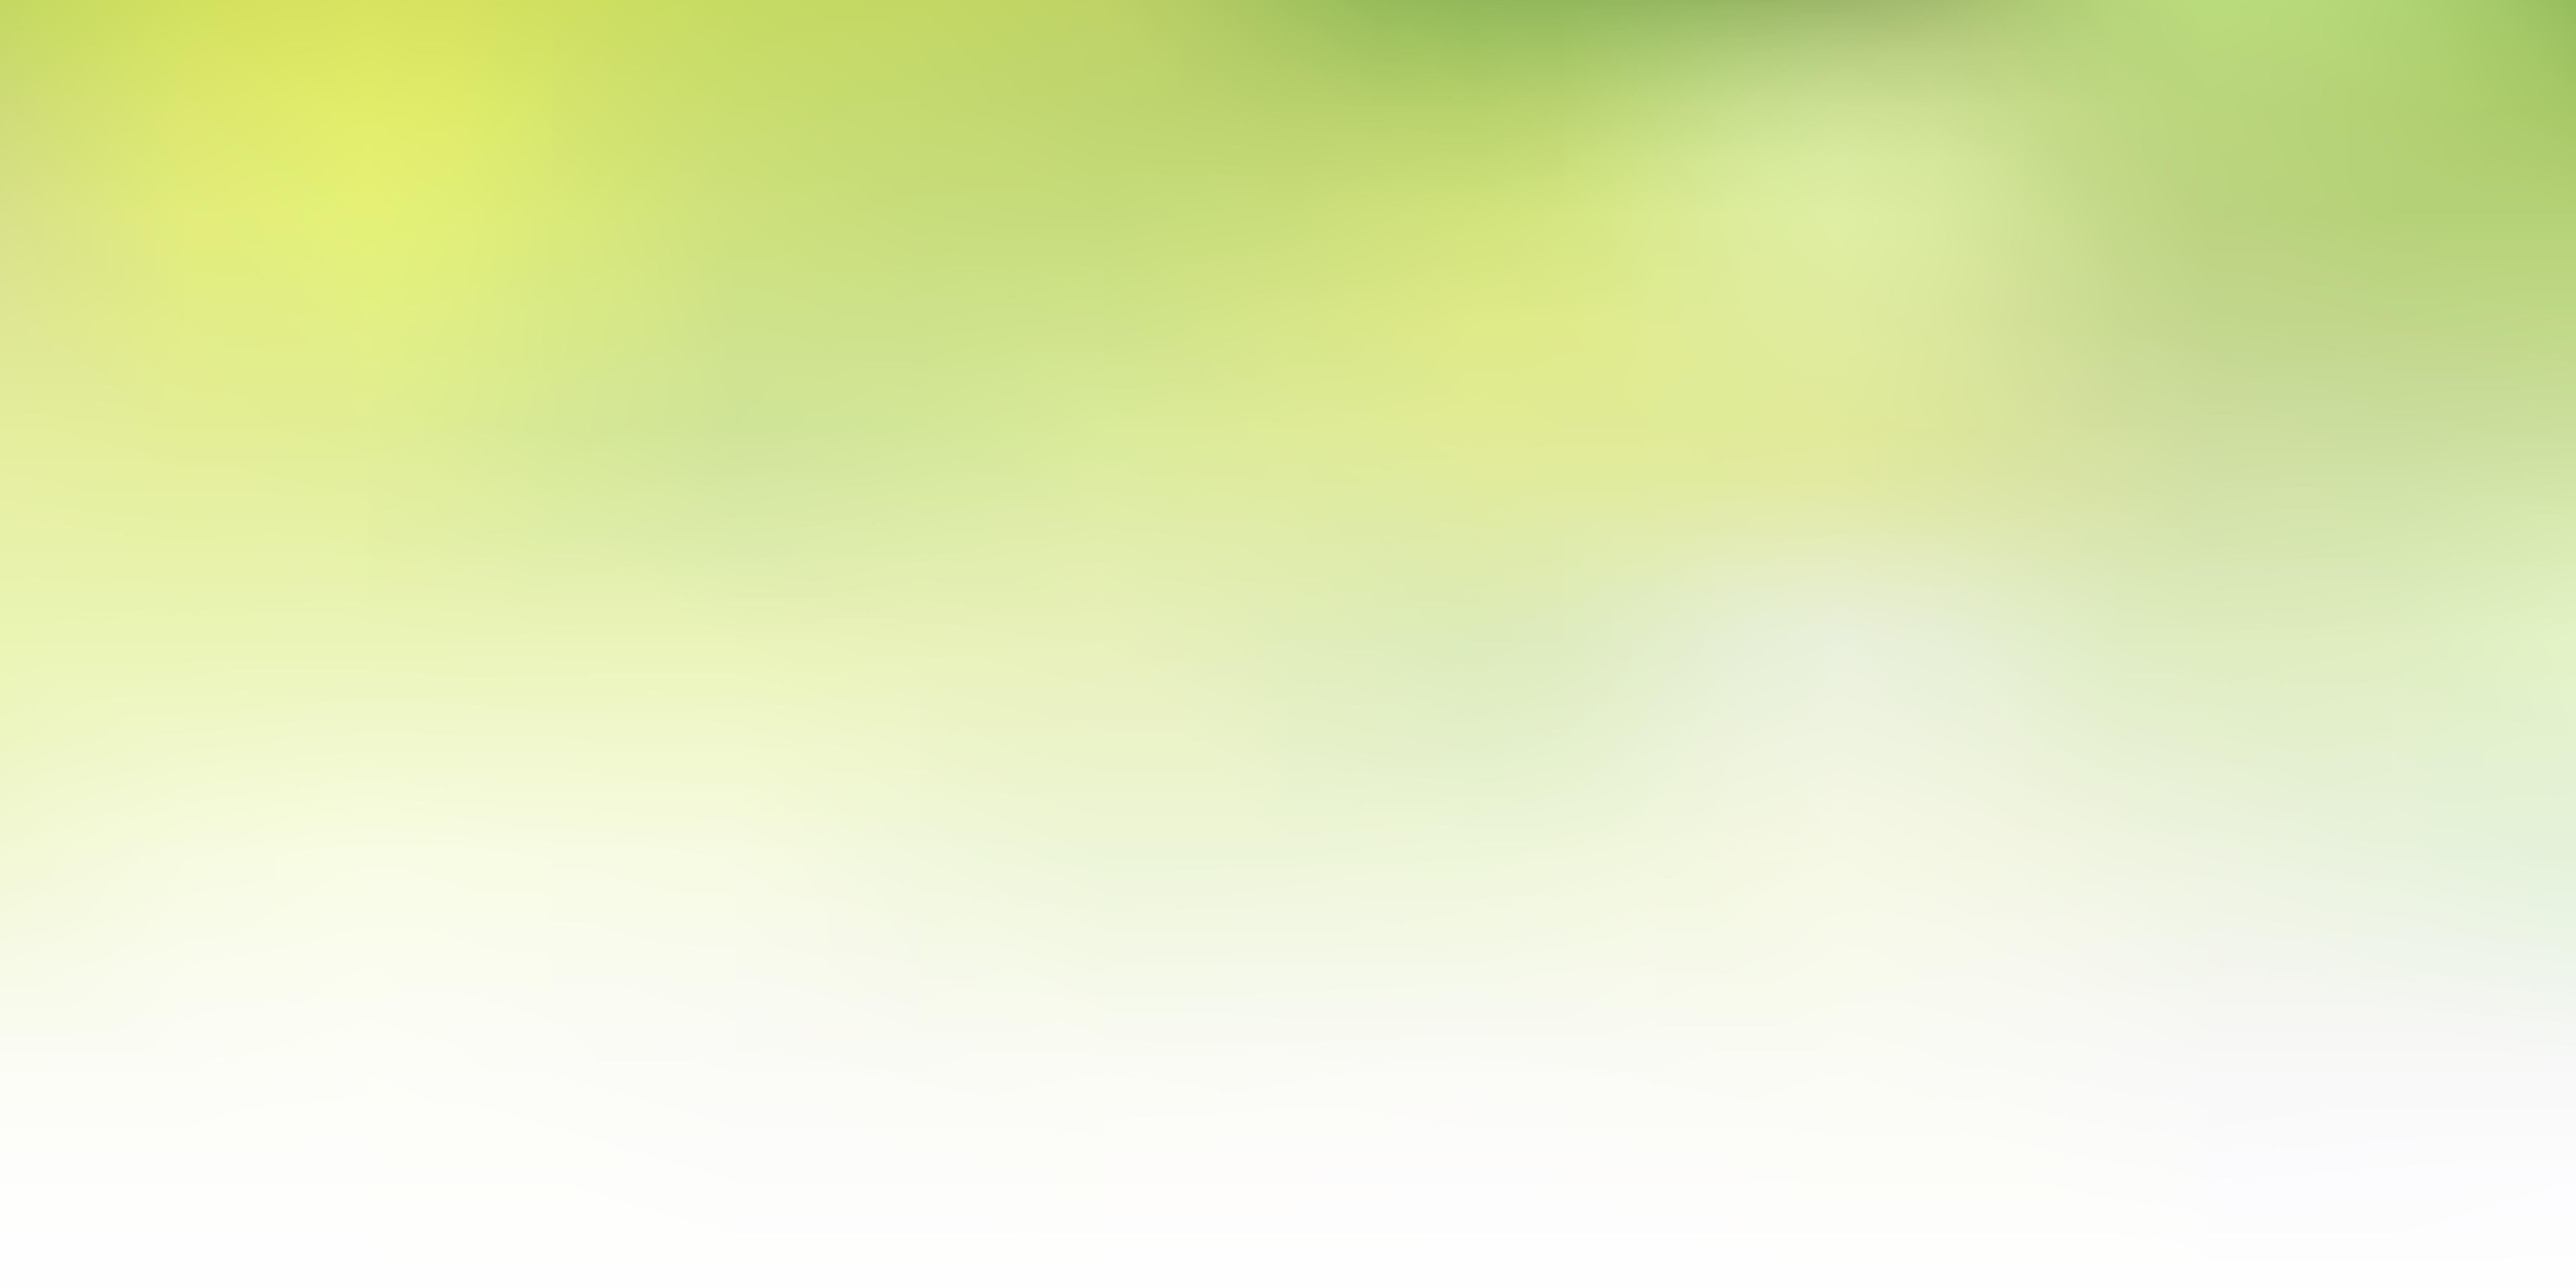 Best Green Blur CB Background Free Stock  Download 